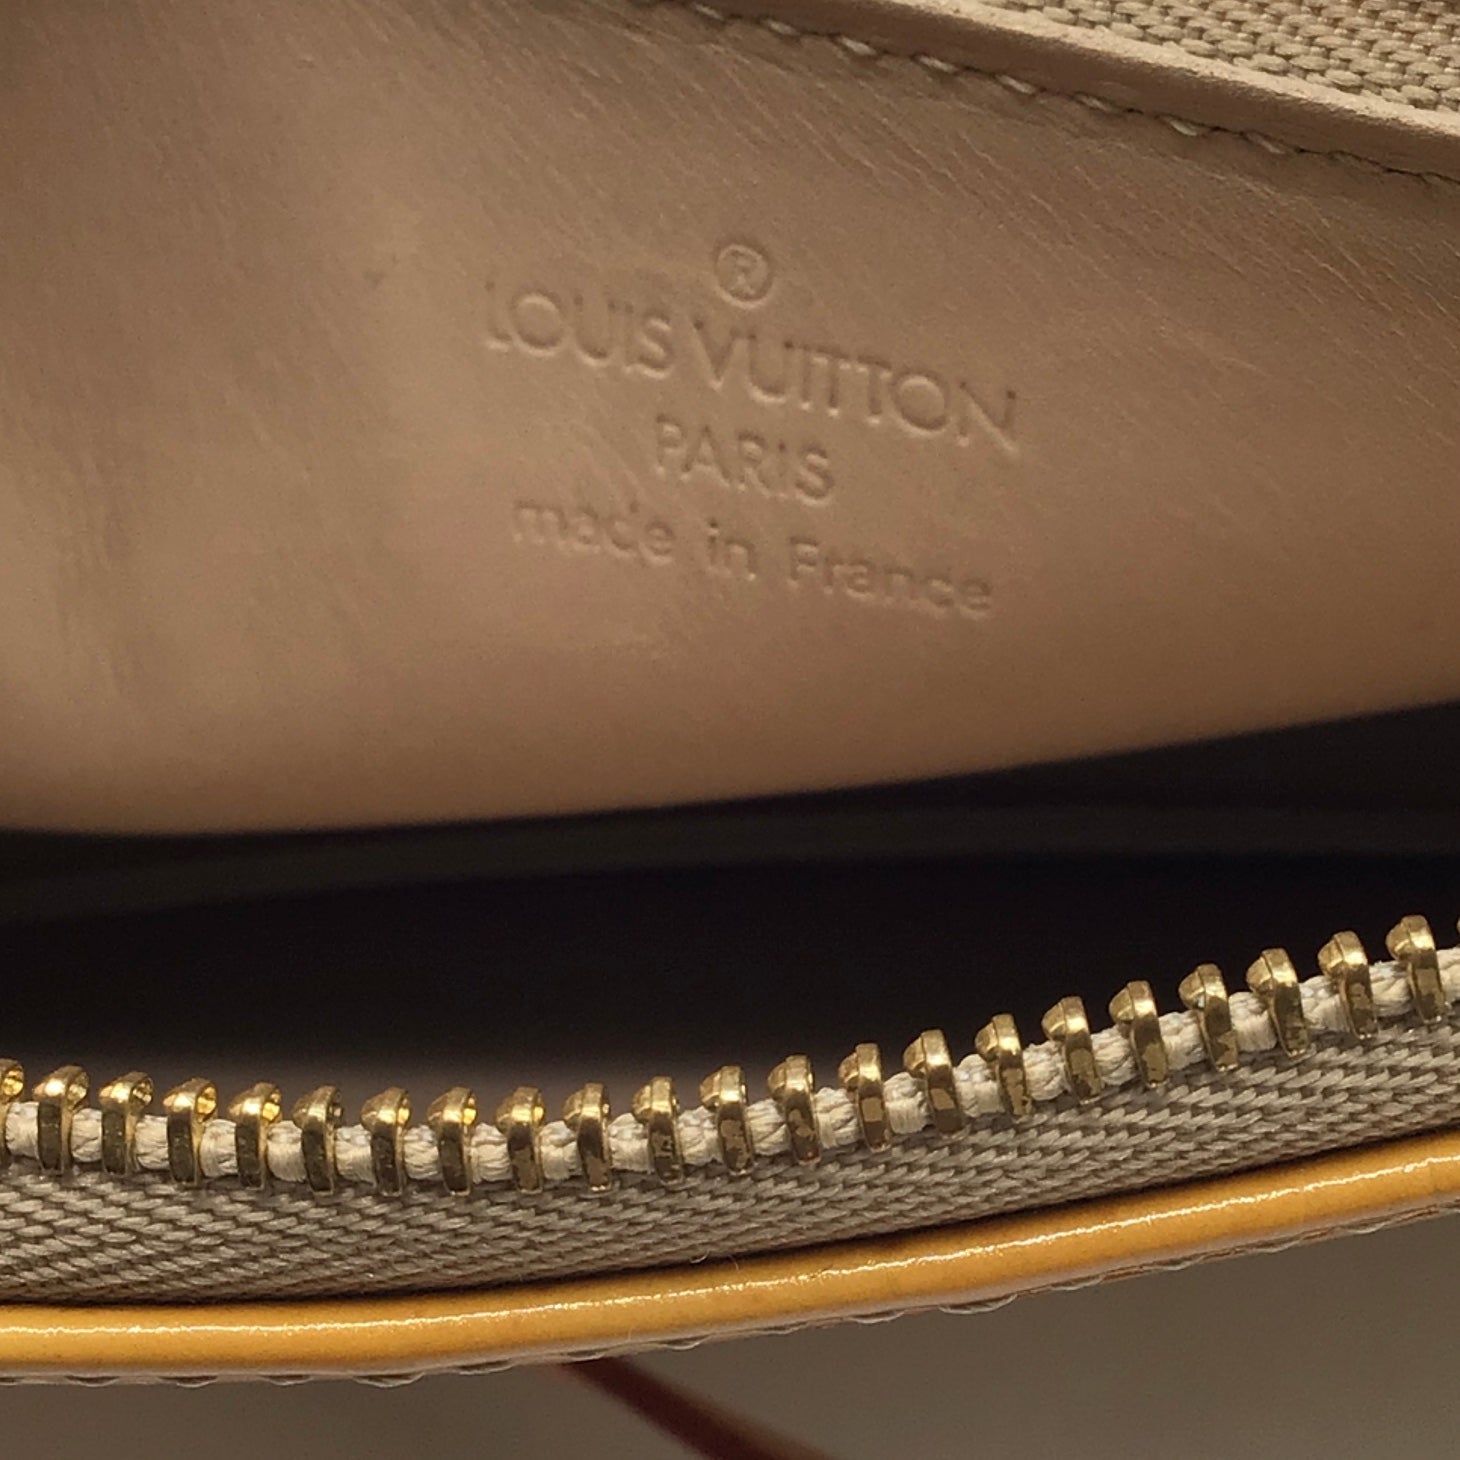 Louis Vuitton Yellow Monogram Vernis Leather Handbag